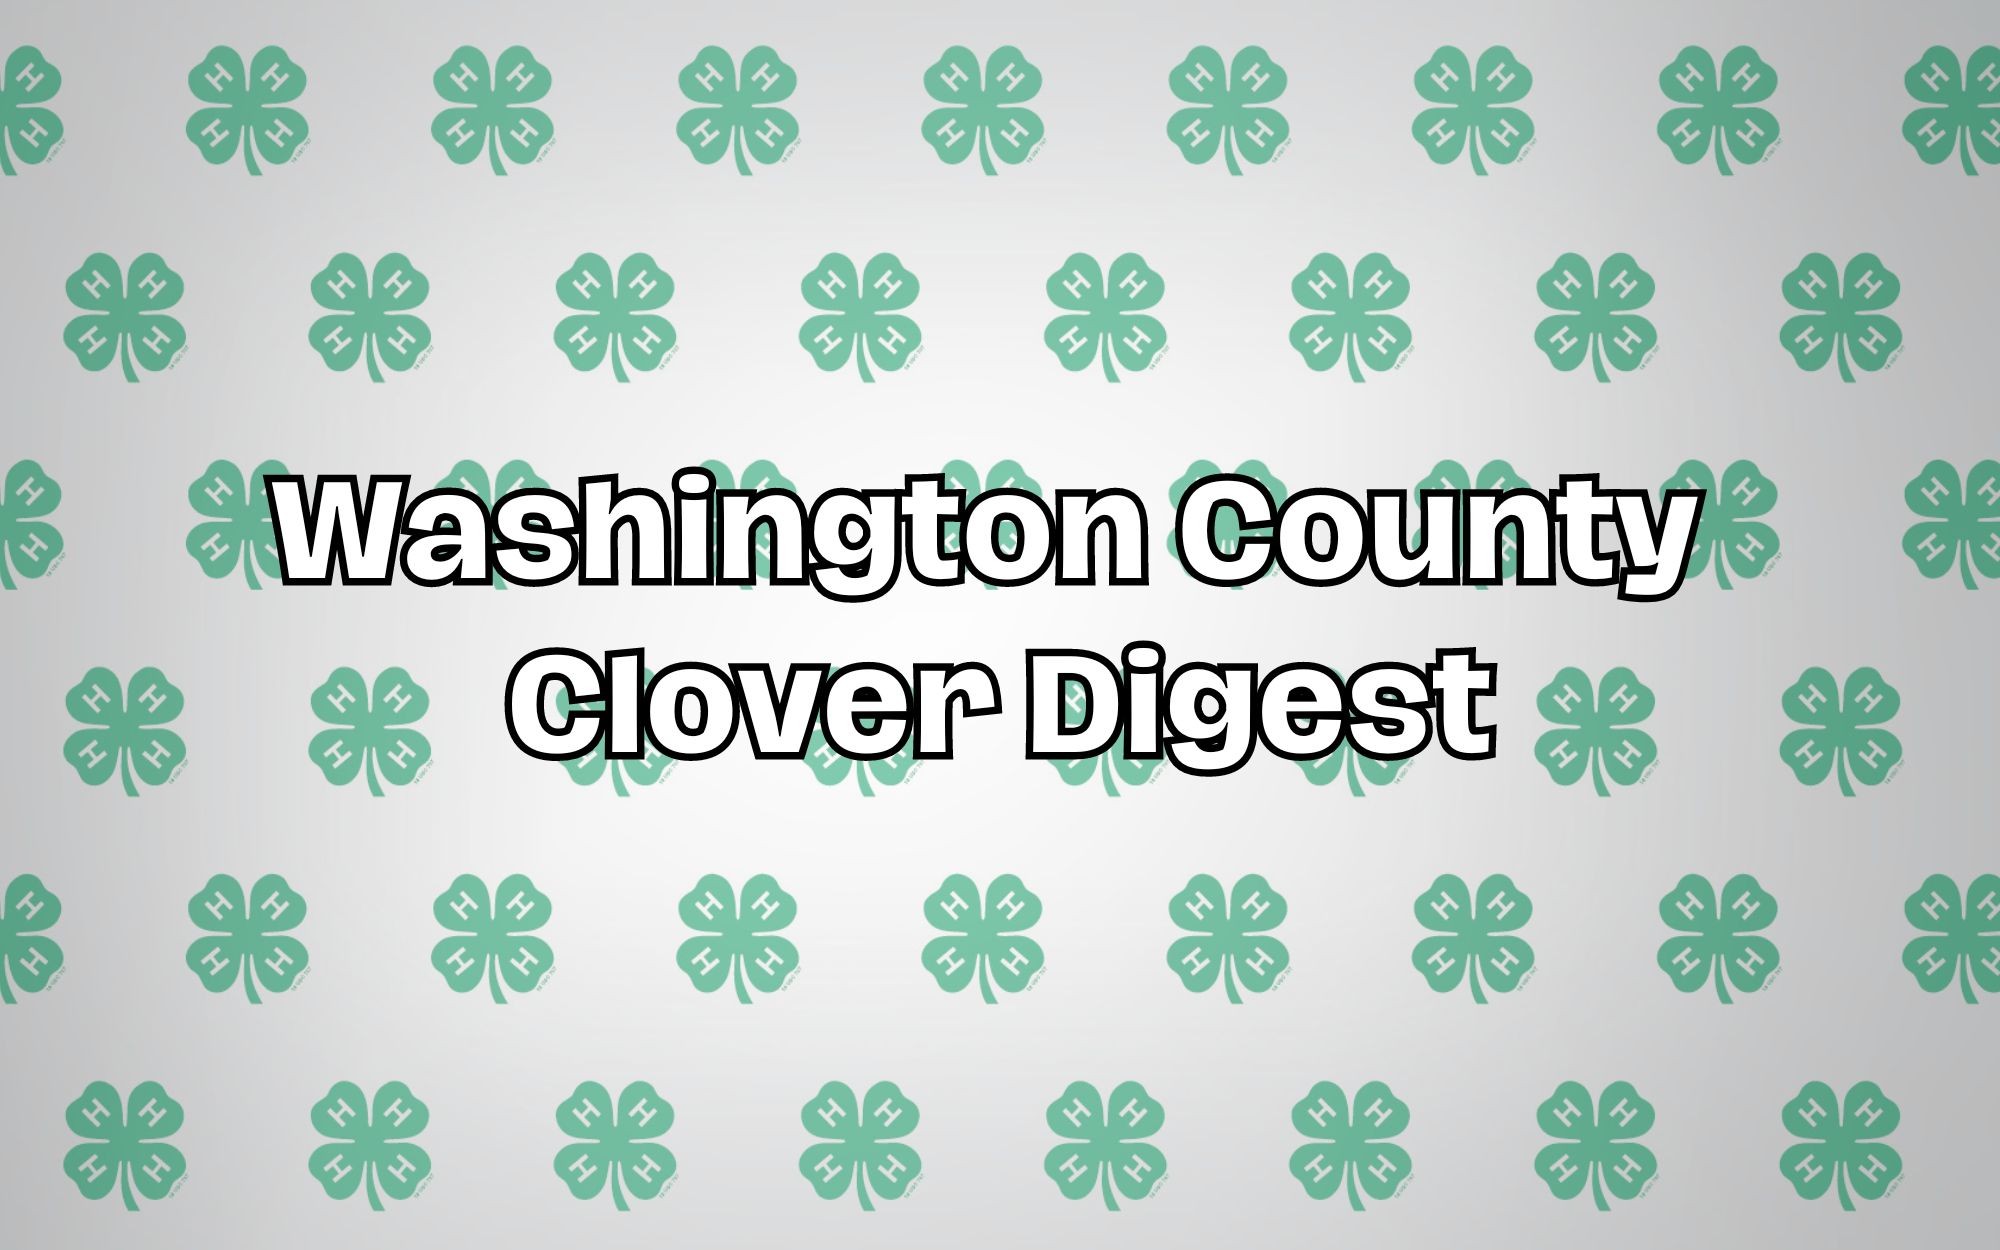 Washington Co. Clover Digest